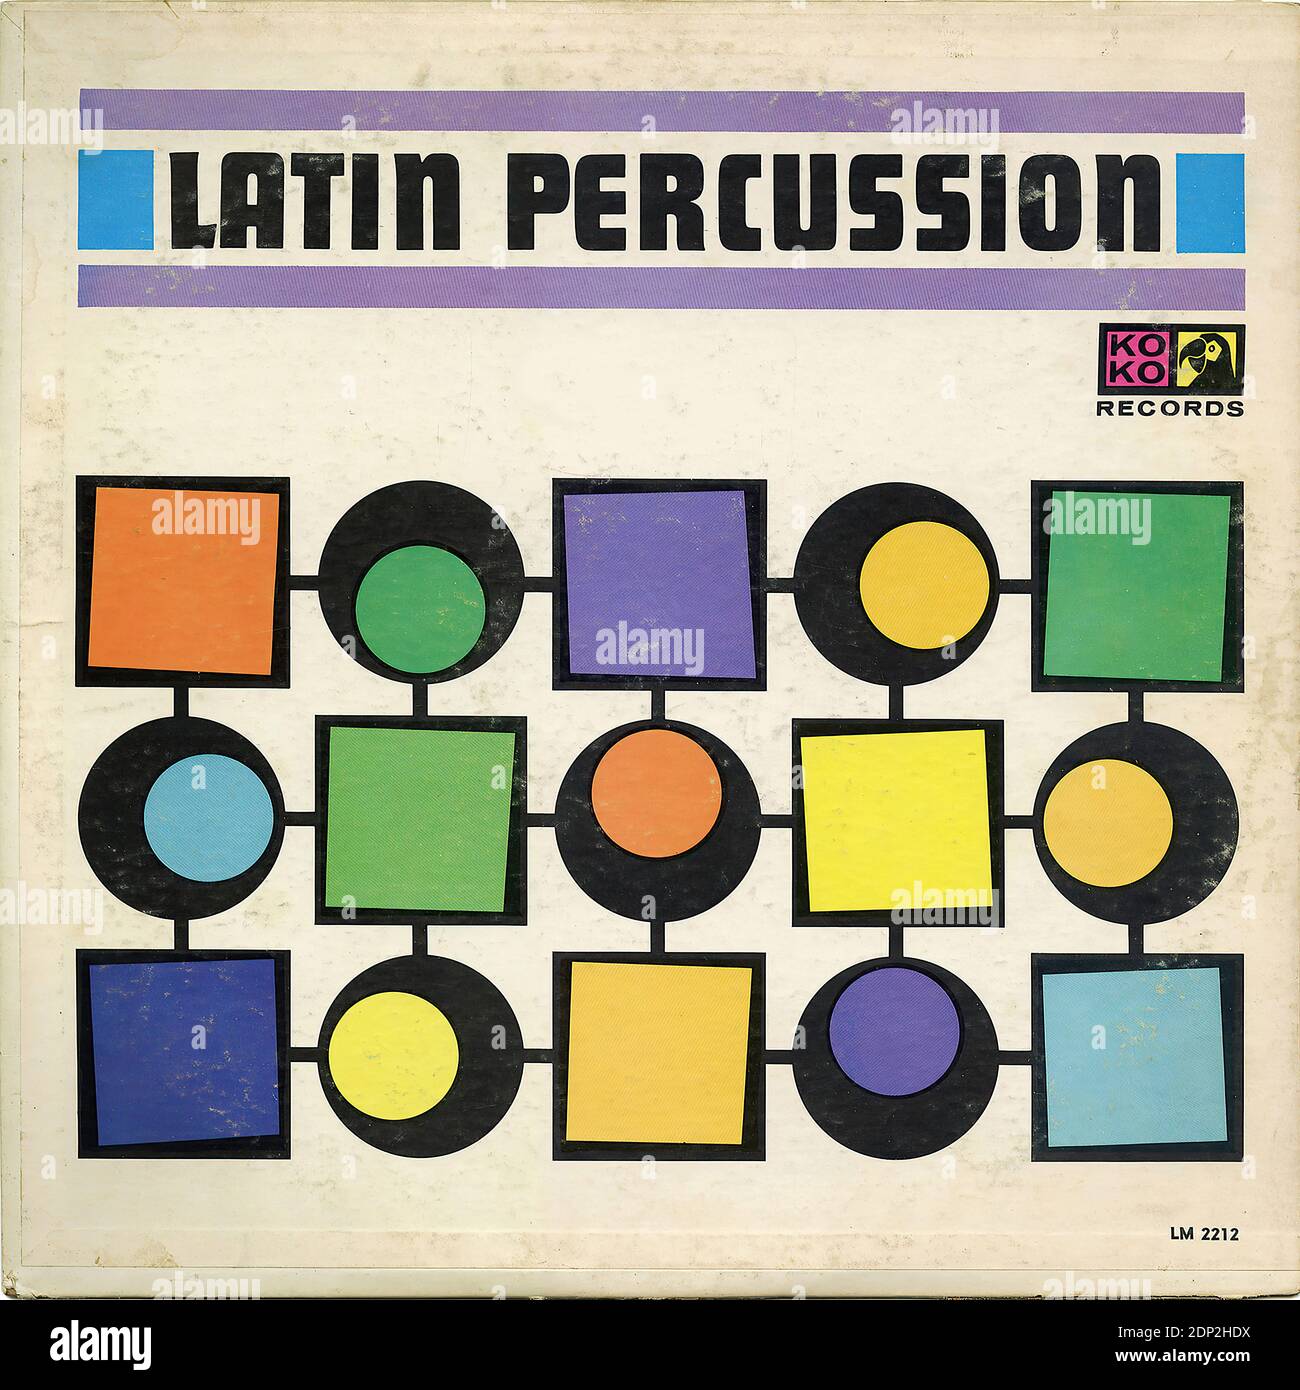 Latin Percussion - Vintage Record Cover Stock Photo